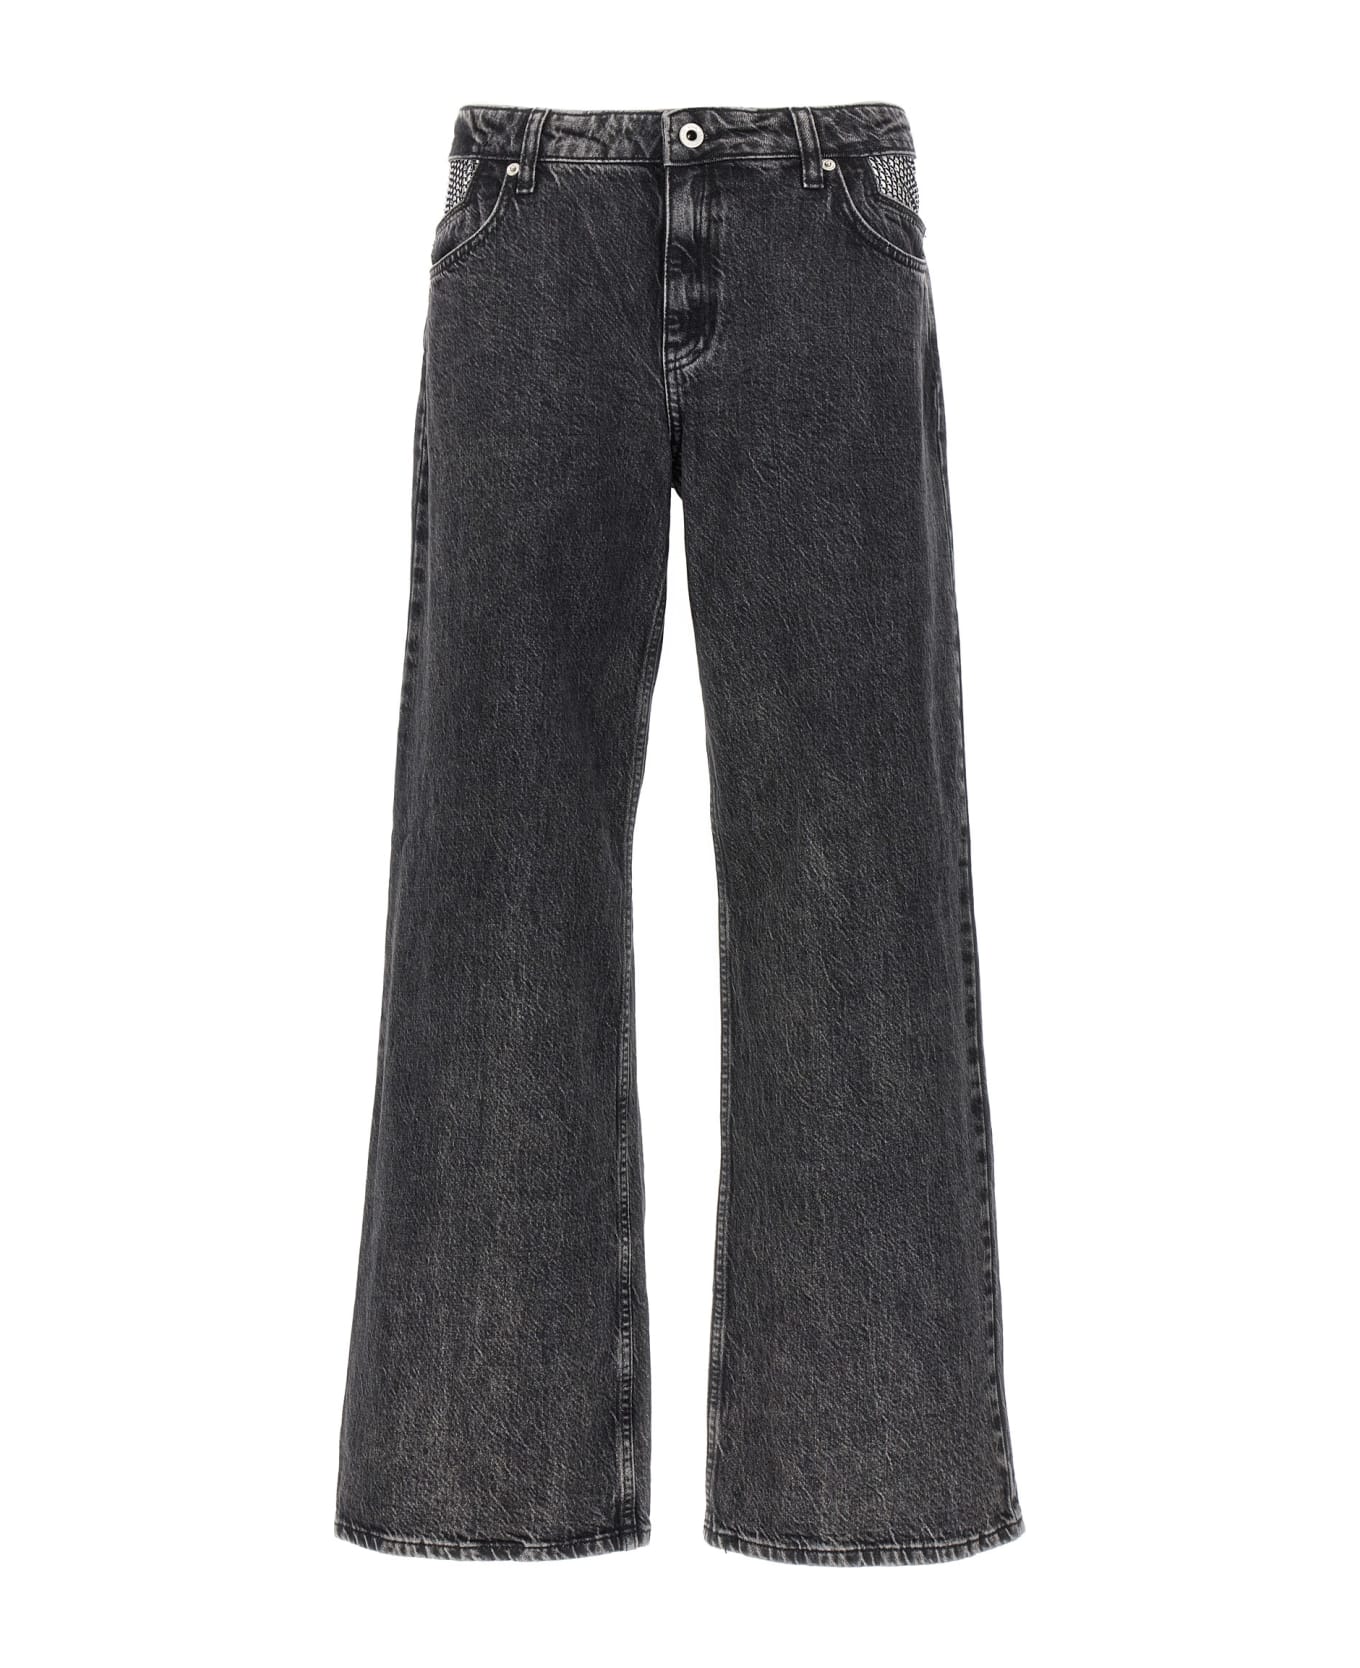 Karl Lagerfeld Rhinestone Detail Jeans - Black   デニム